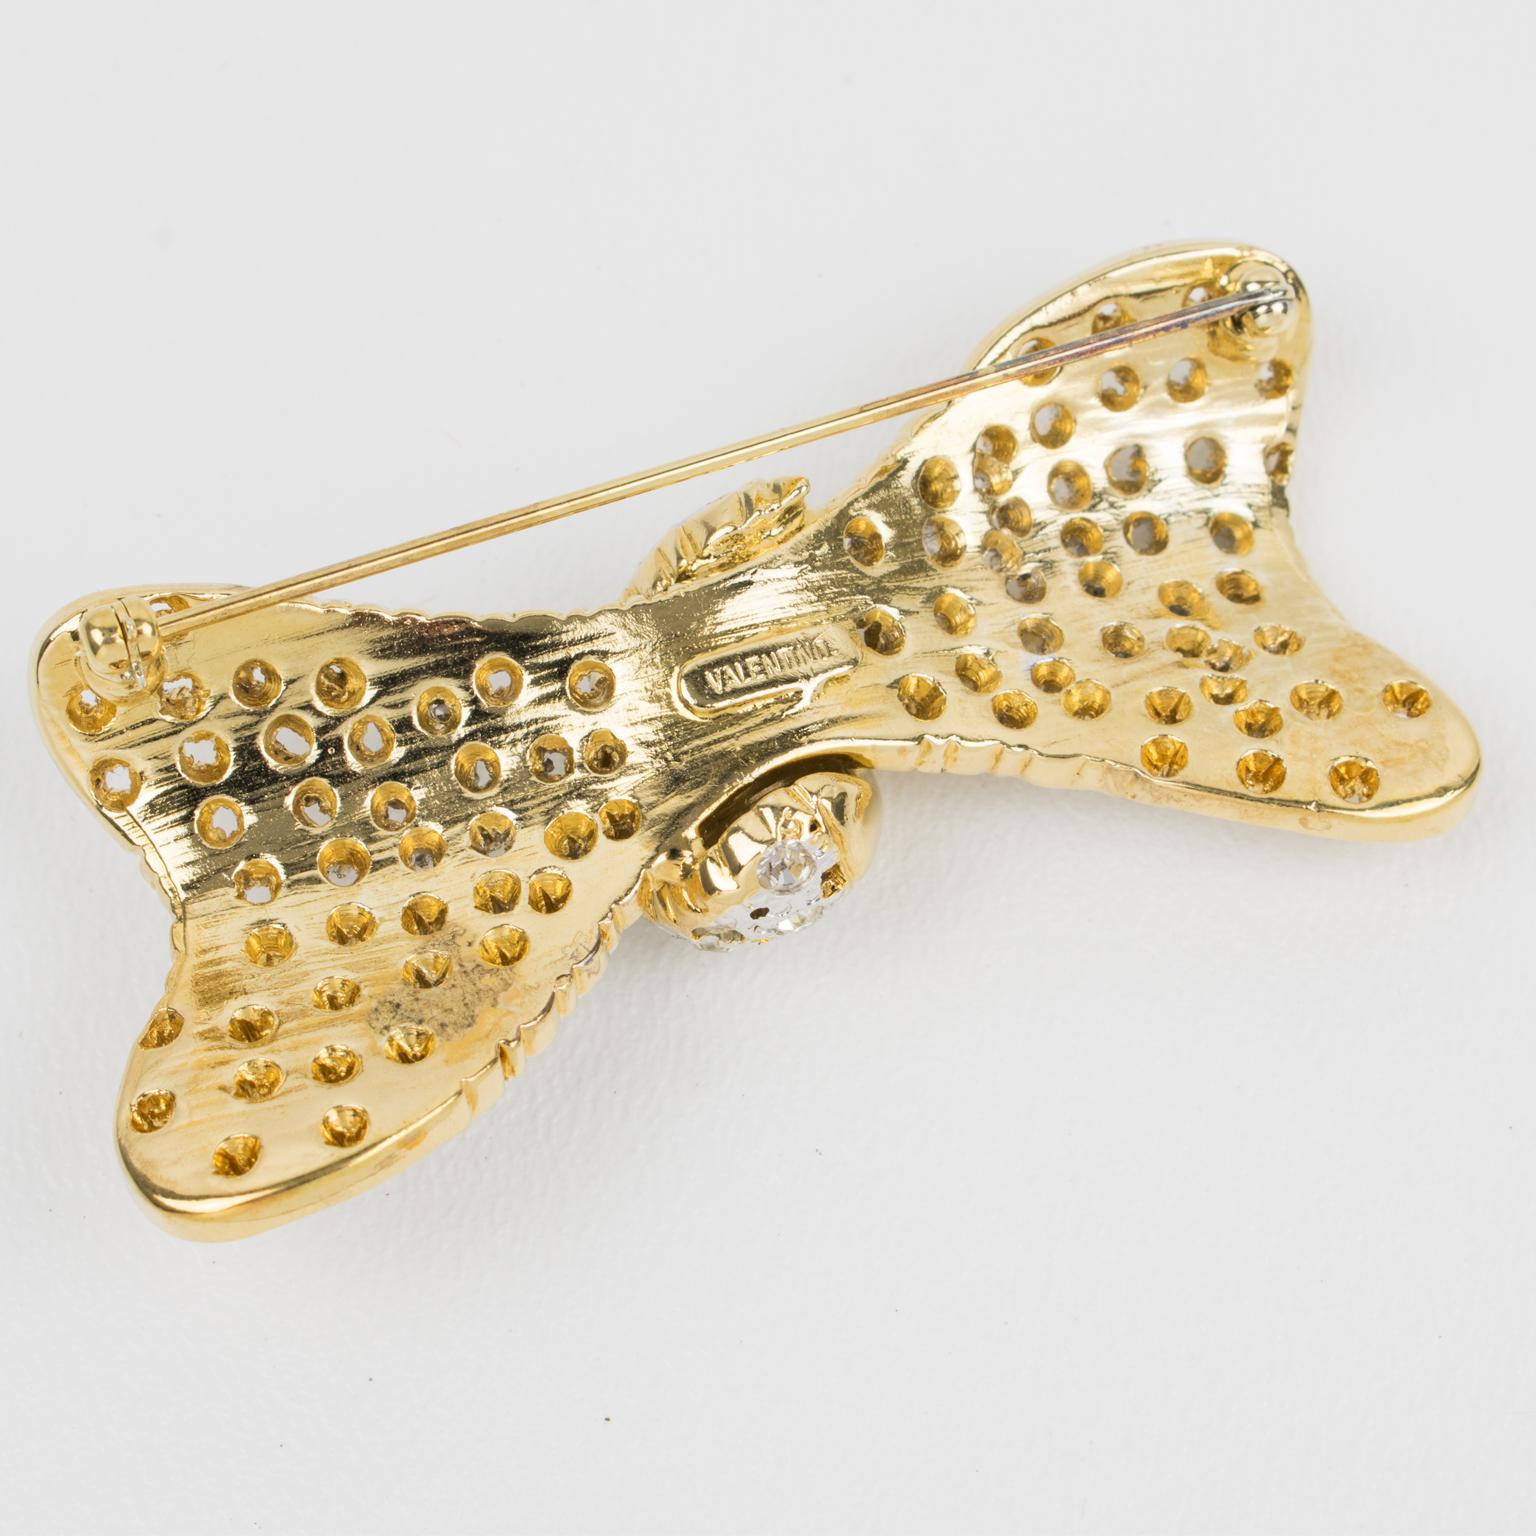 Valentino Garavani Jeweled Bowtie Pin Brooch In Excellent Condition For Sale In Atlanta, GA